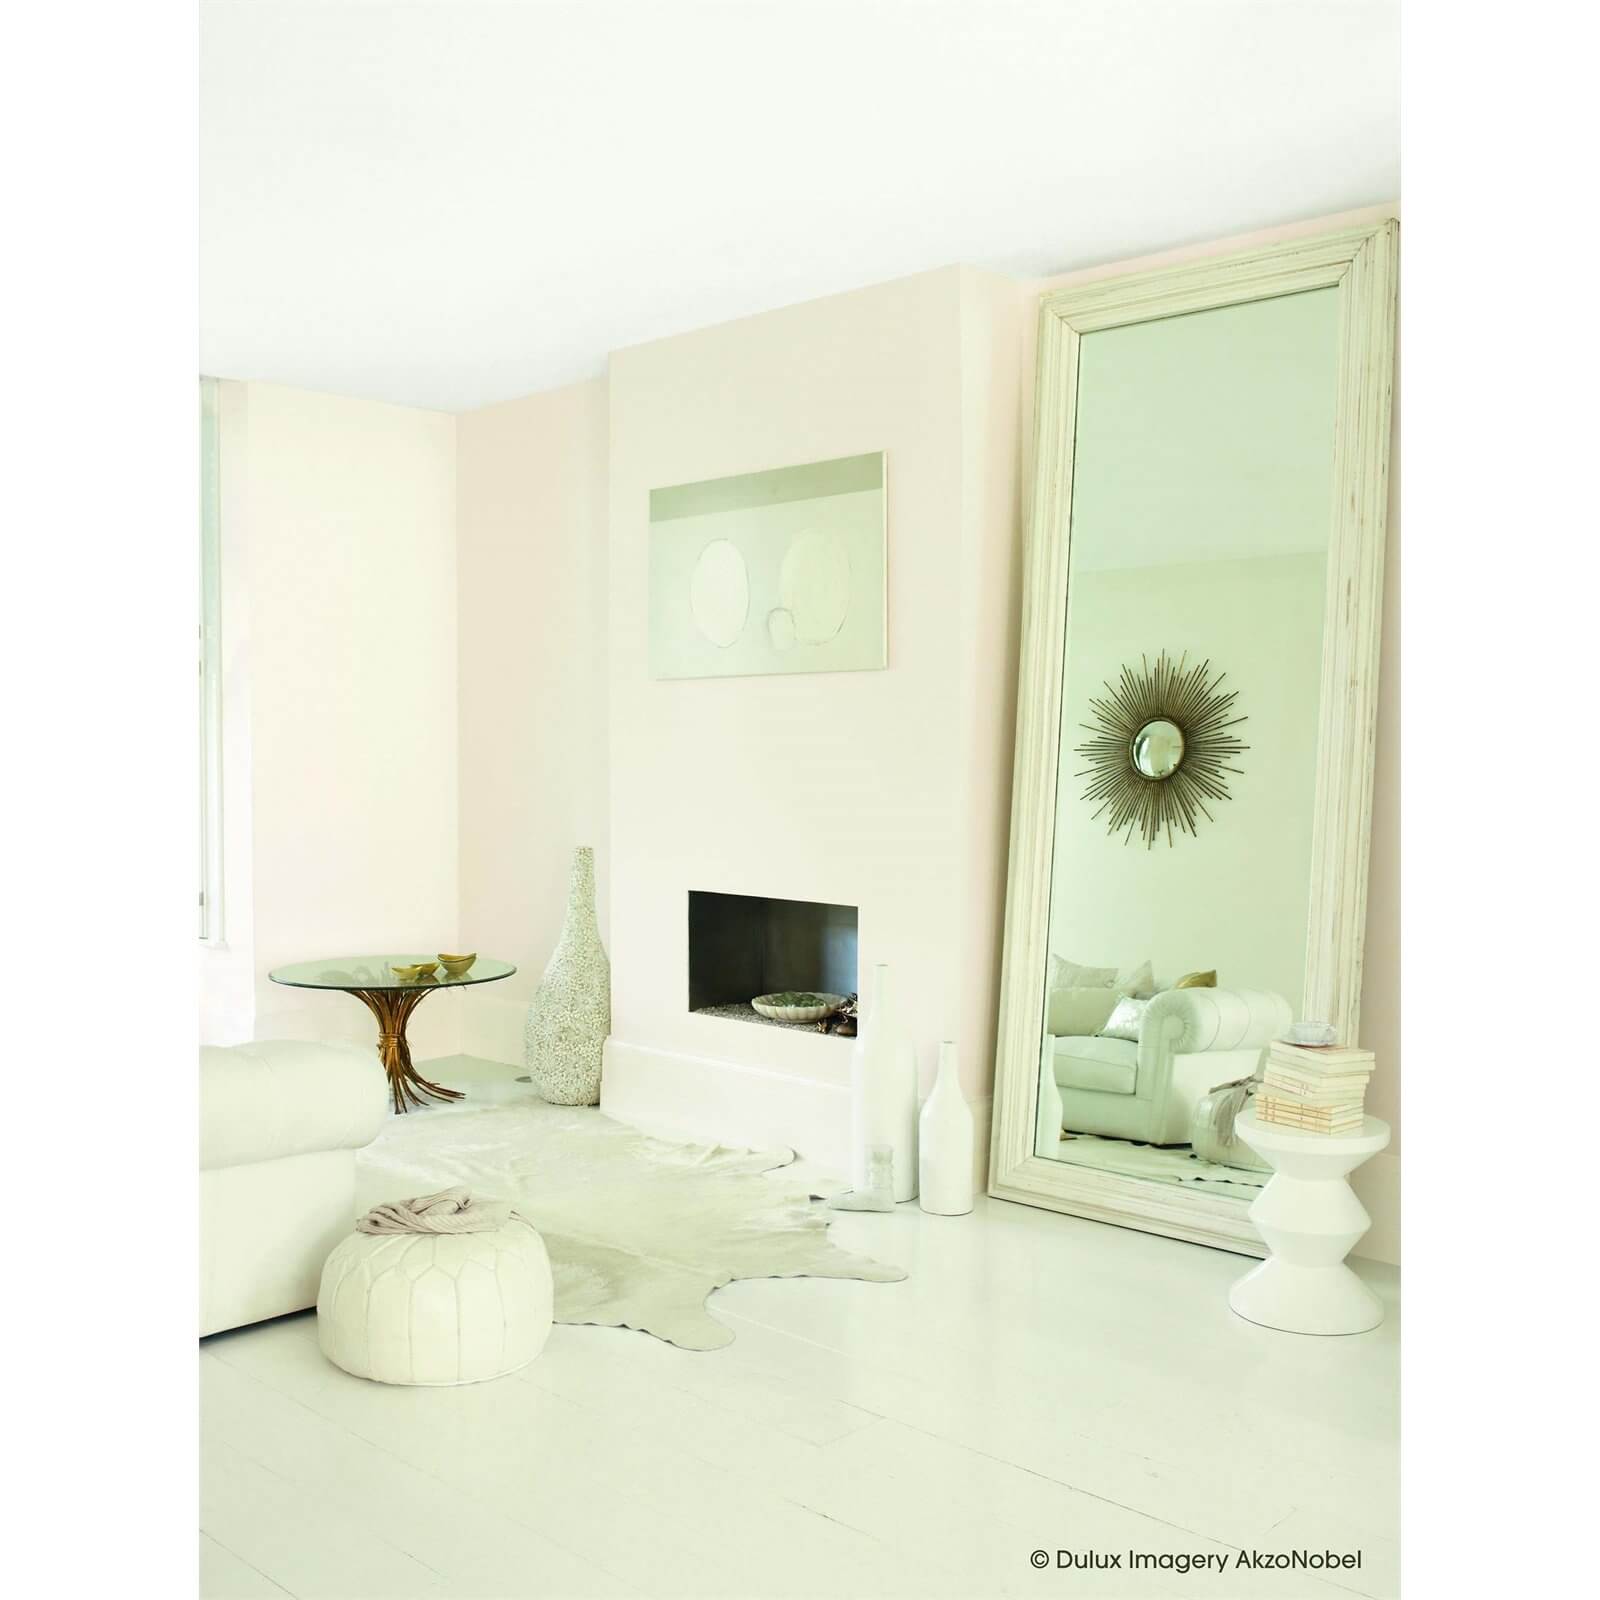 Dulux Easycare Bathroom Soft Sheen Emulsion Paint Jasmine White - 2.5L